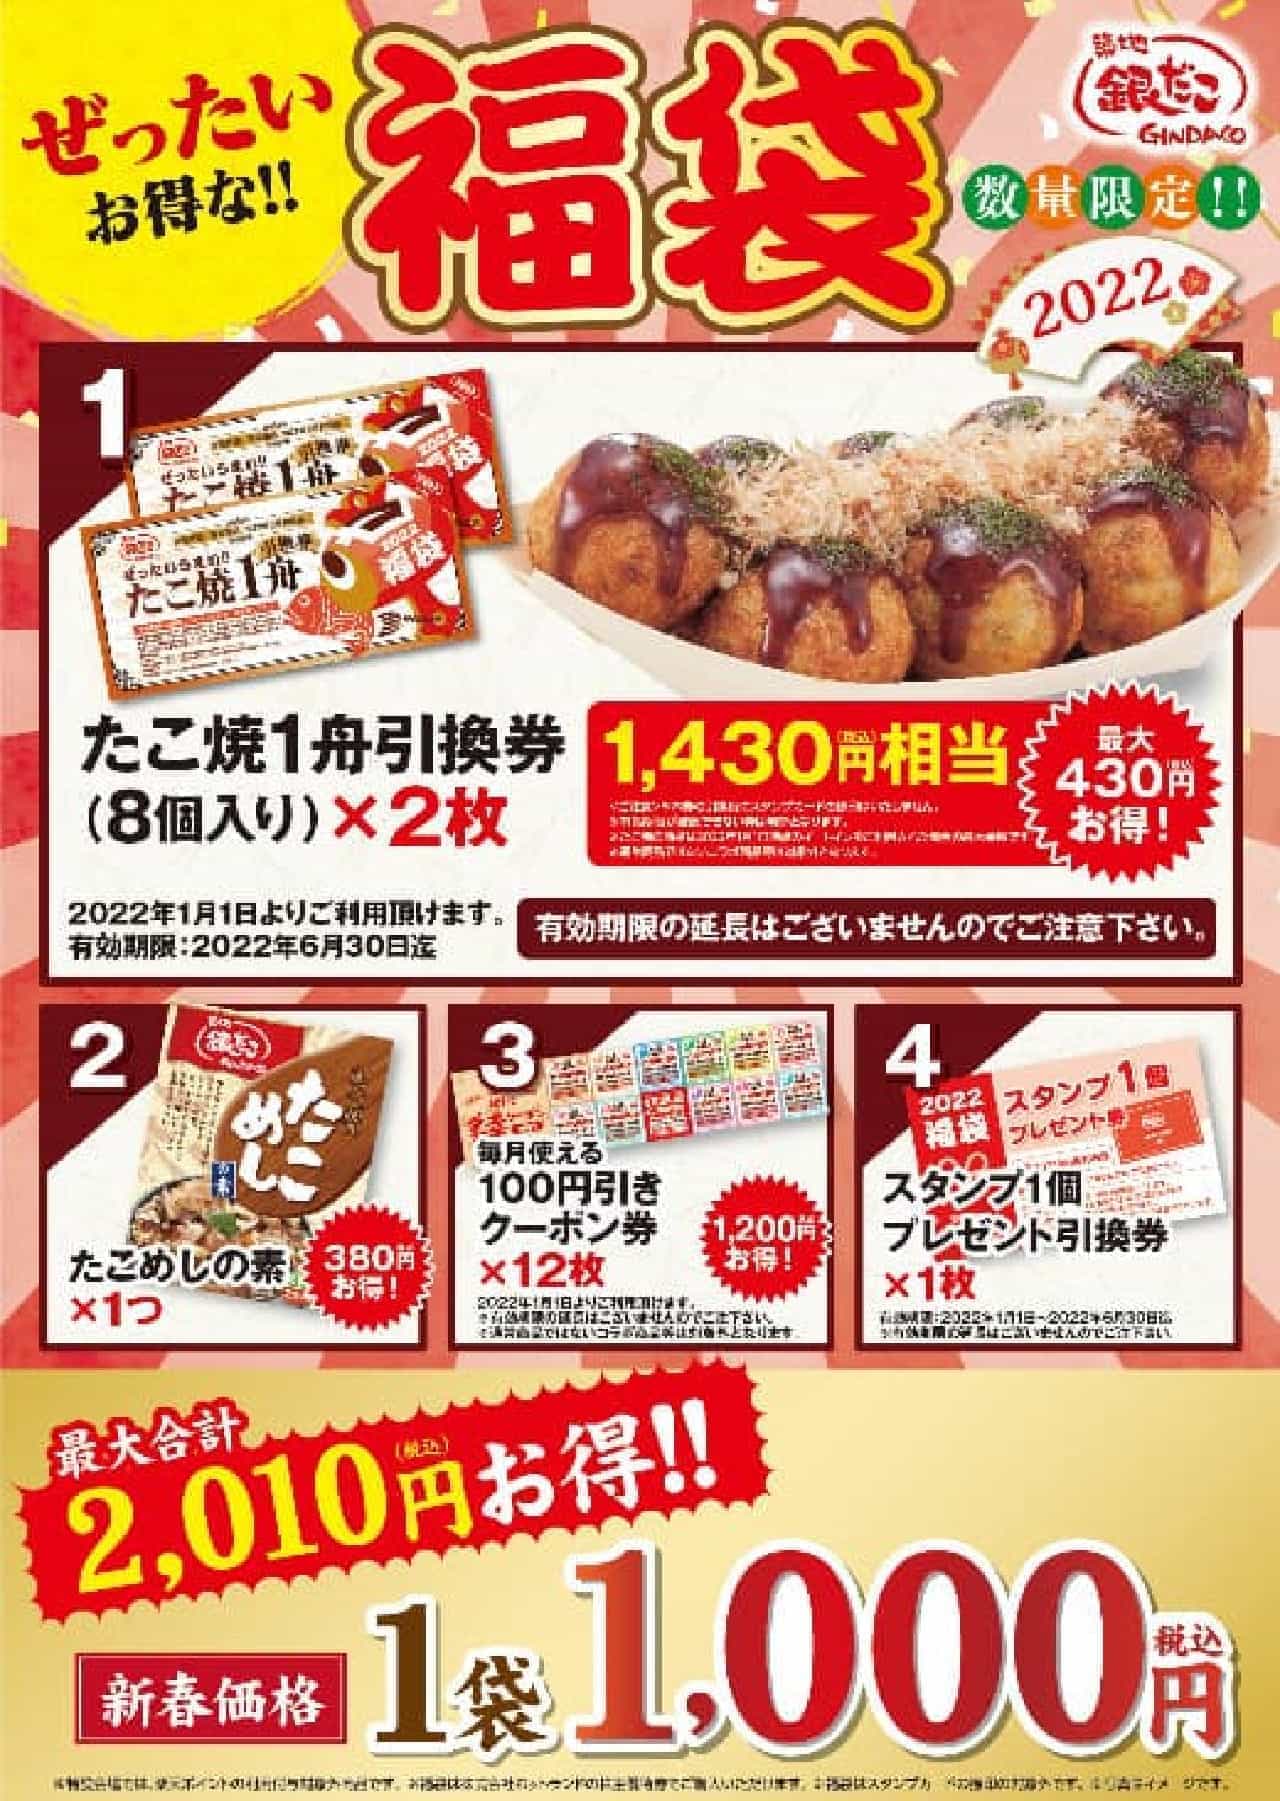 Tsukiji Gindaco "Great deals !! Lucky bag"